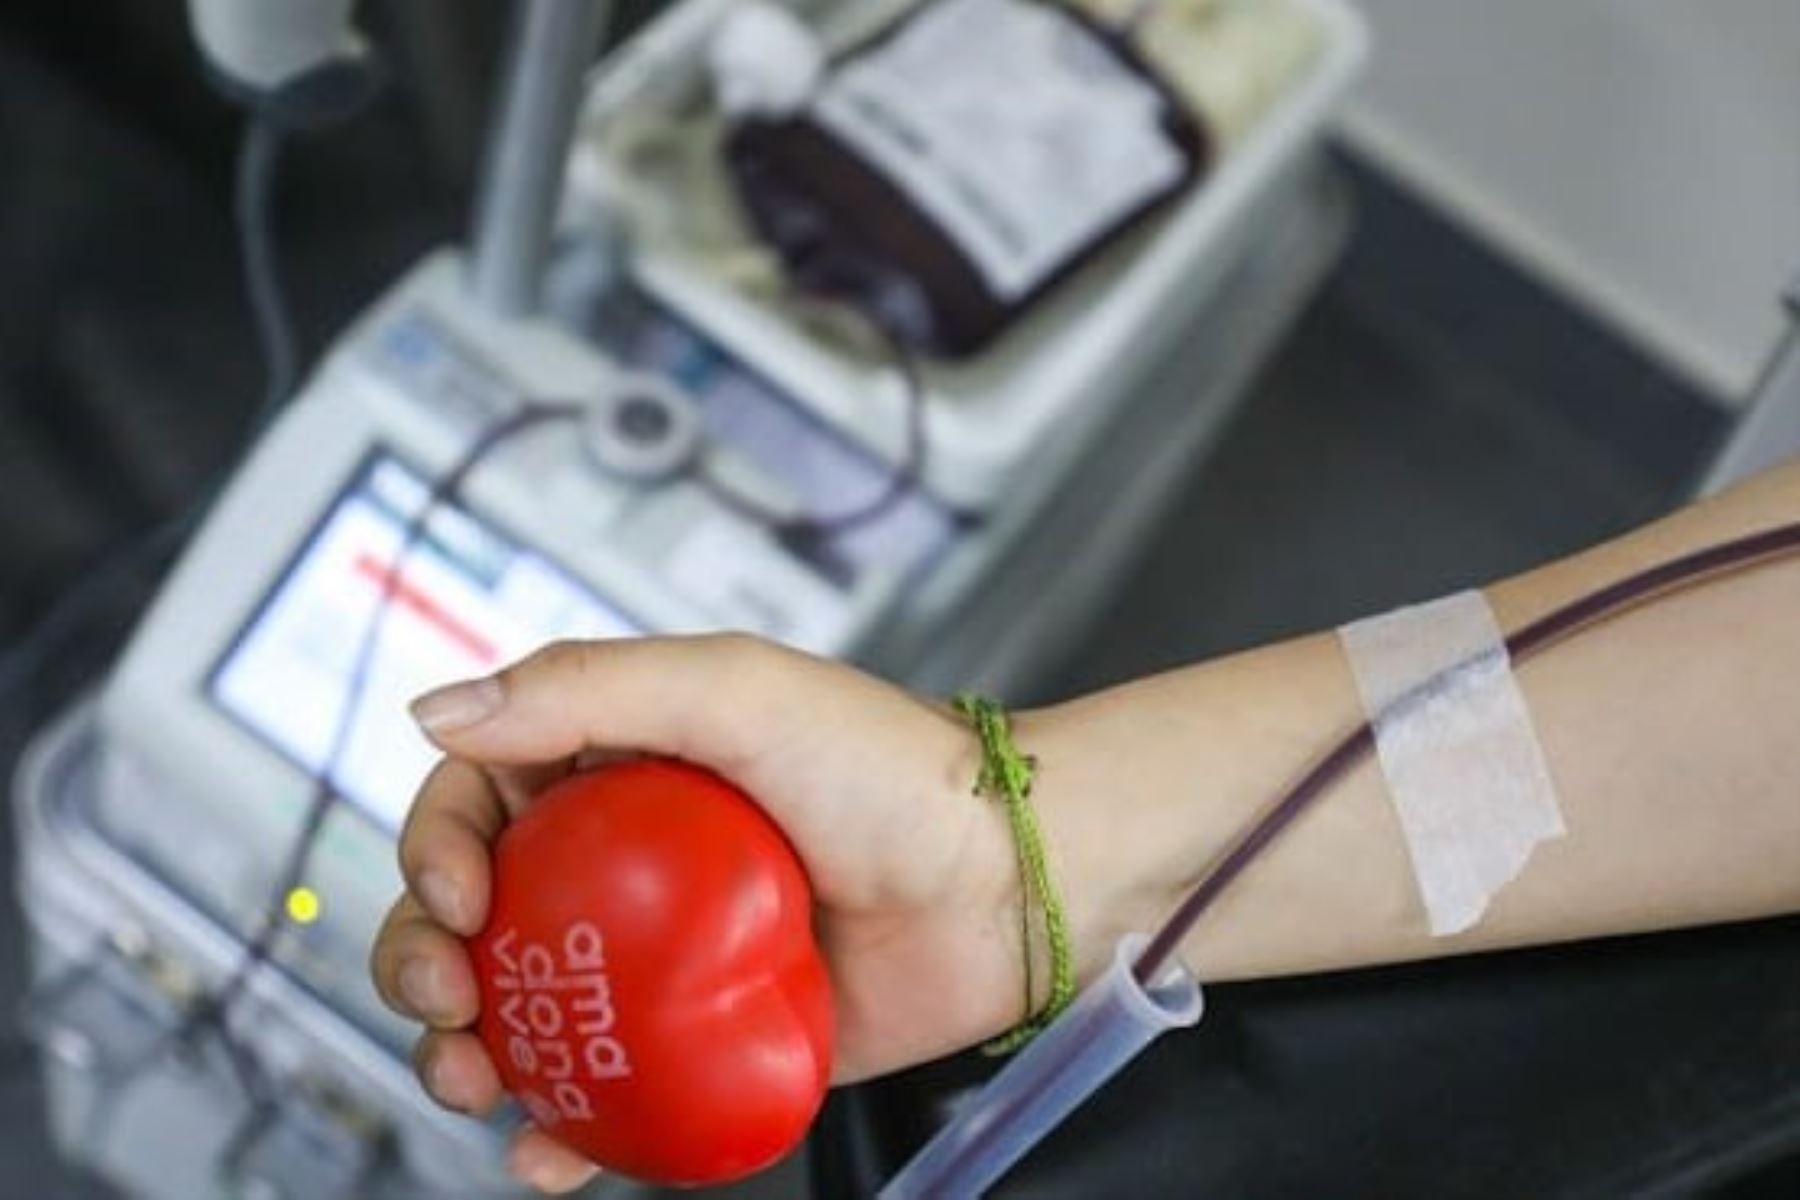 Donantes de sangre: 4 centros comerciales de Lima y Callao son puntos de colecta. Foto: ANDINA/difusión.